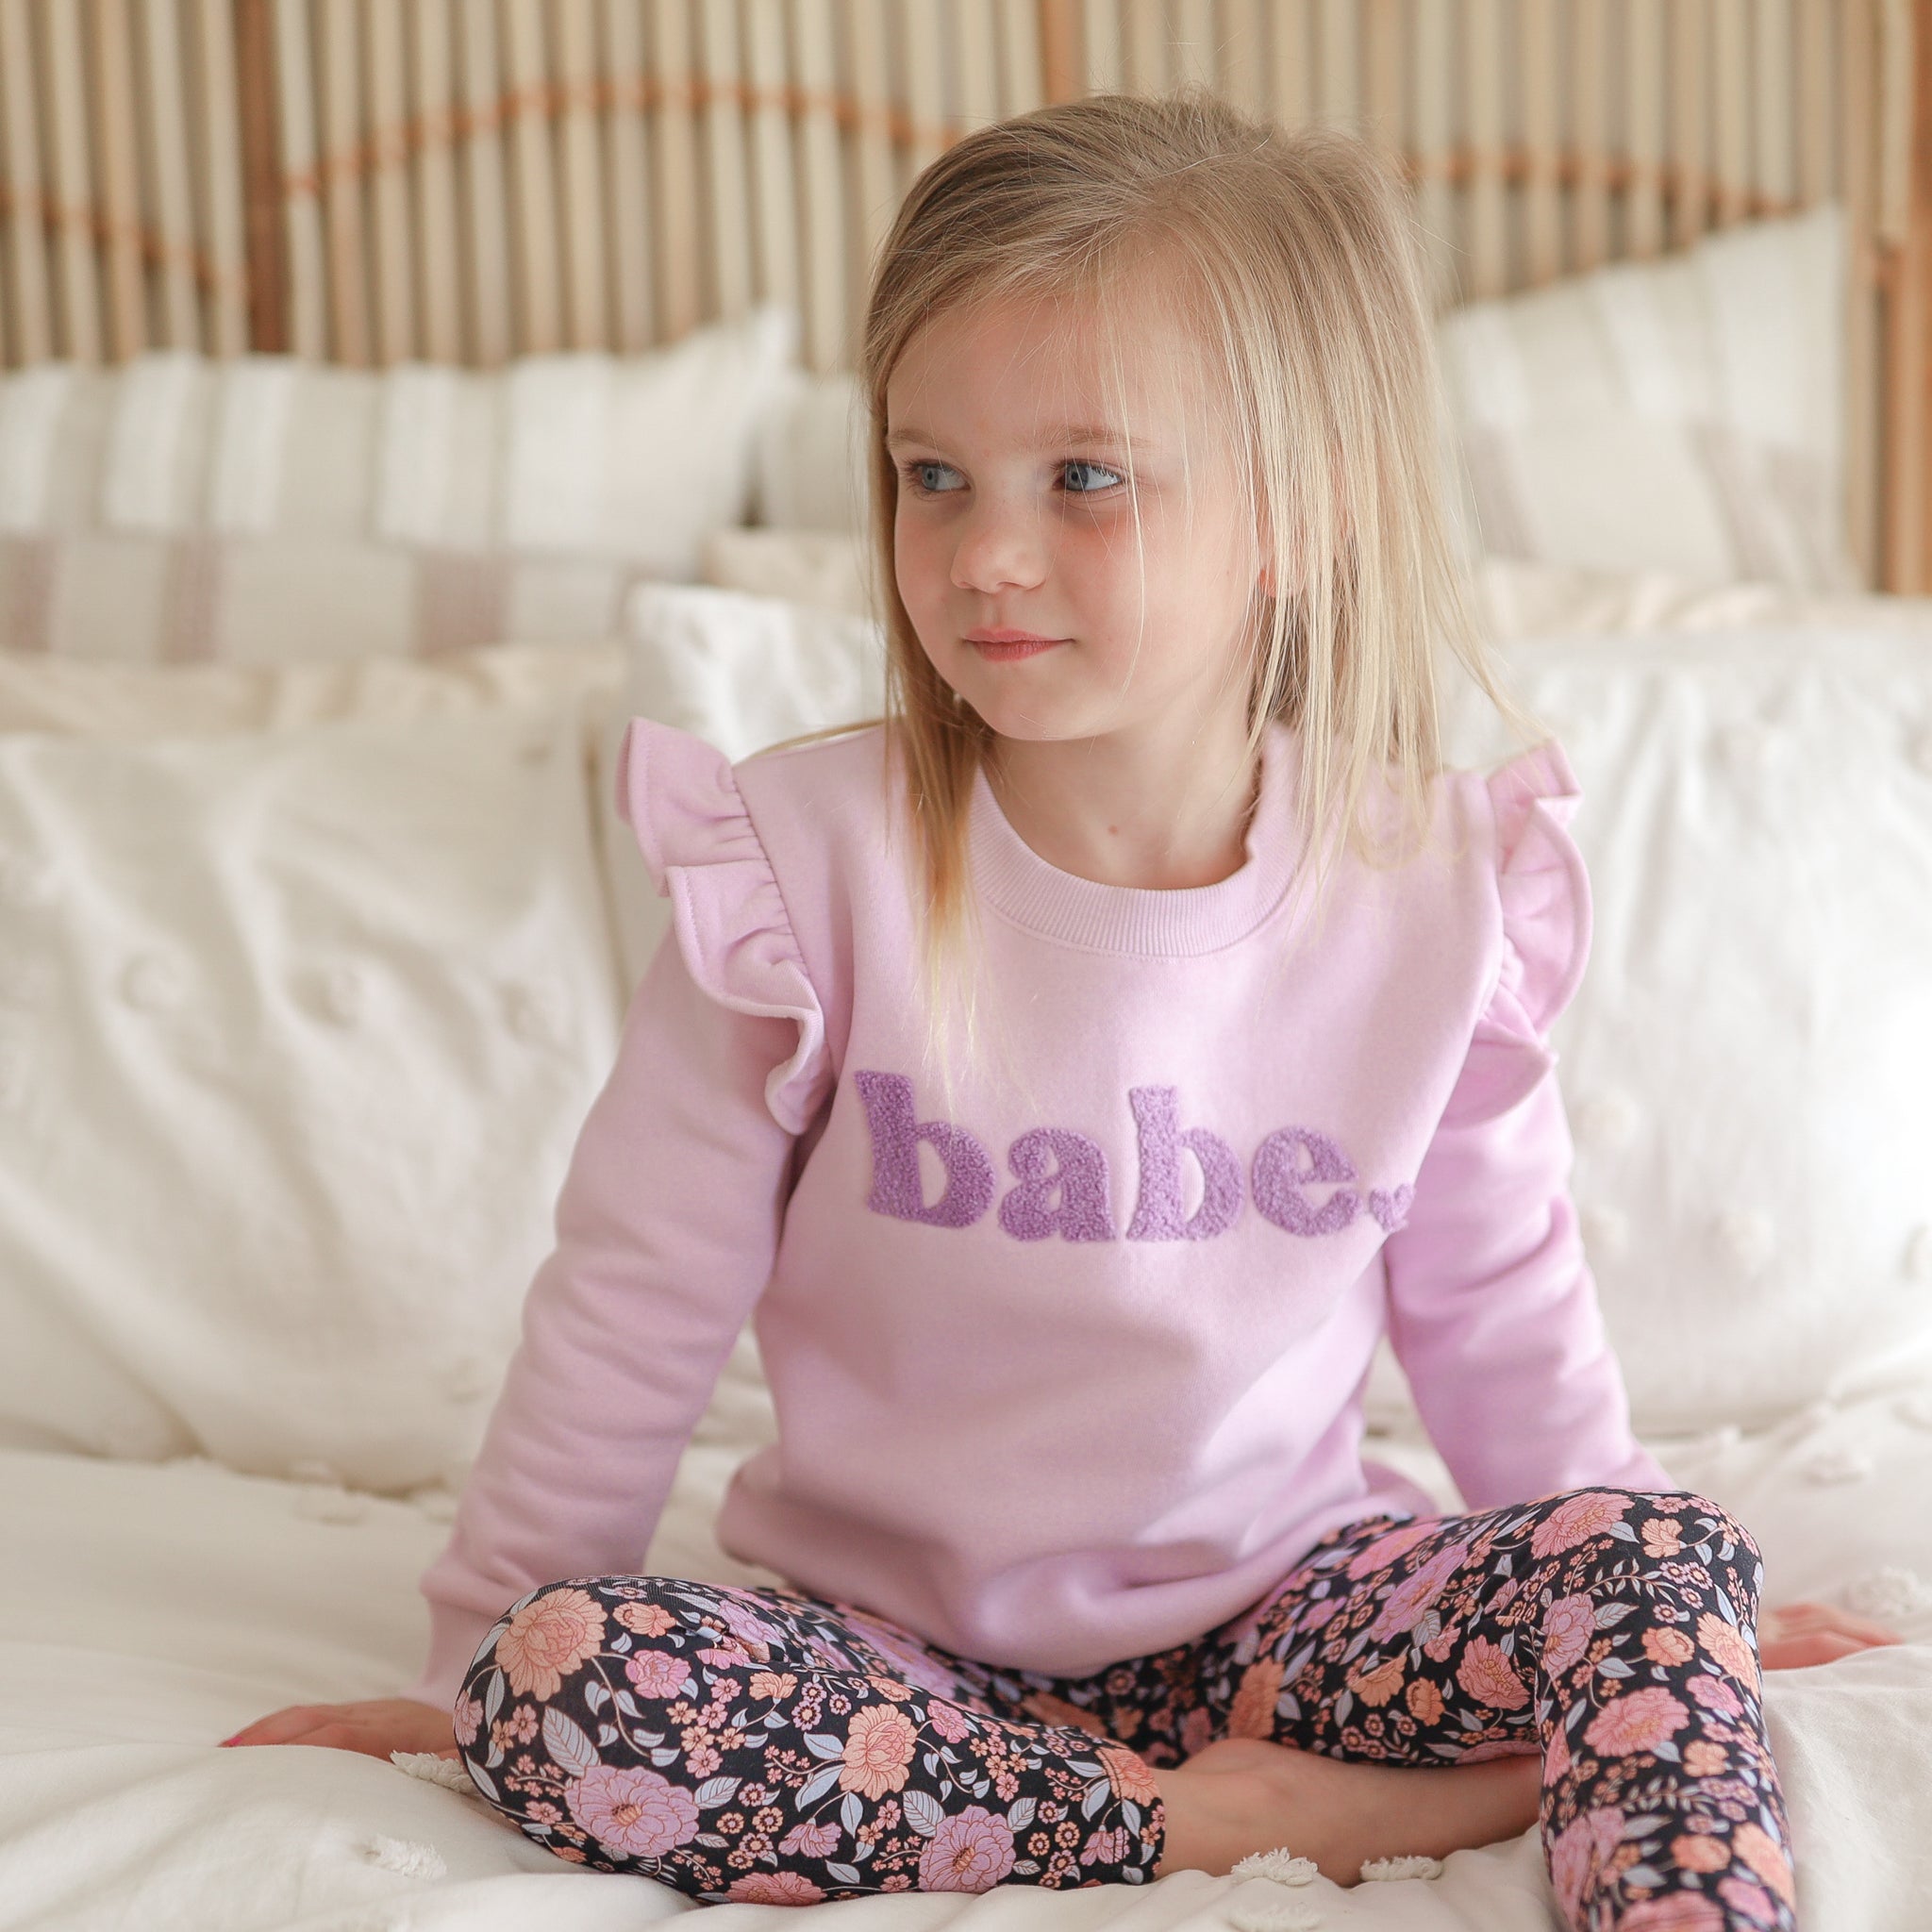 Juicy Couture Baby Girls 12-24 Months Long Sleeve Fleece Sweatshirt Ditsy-Floral Jersey Leggings Set - 18 Months